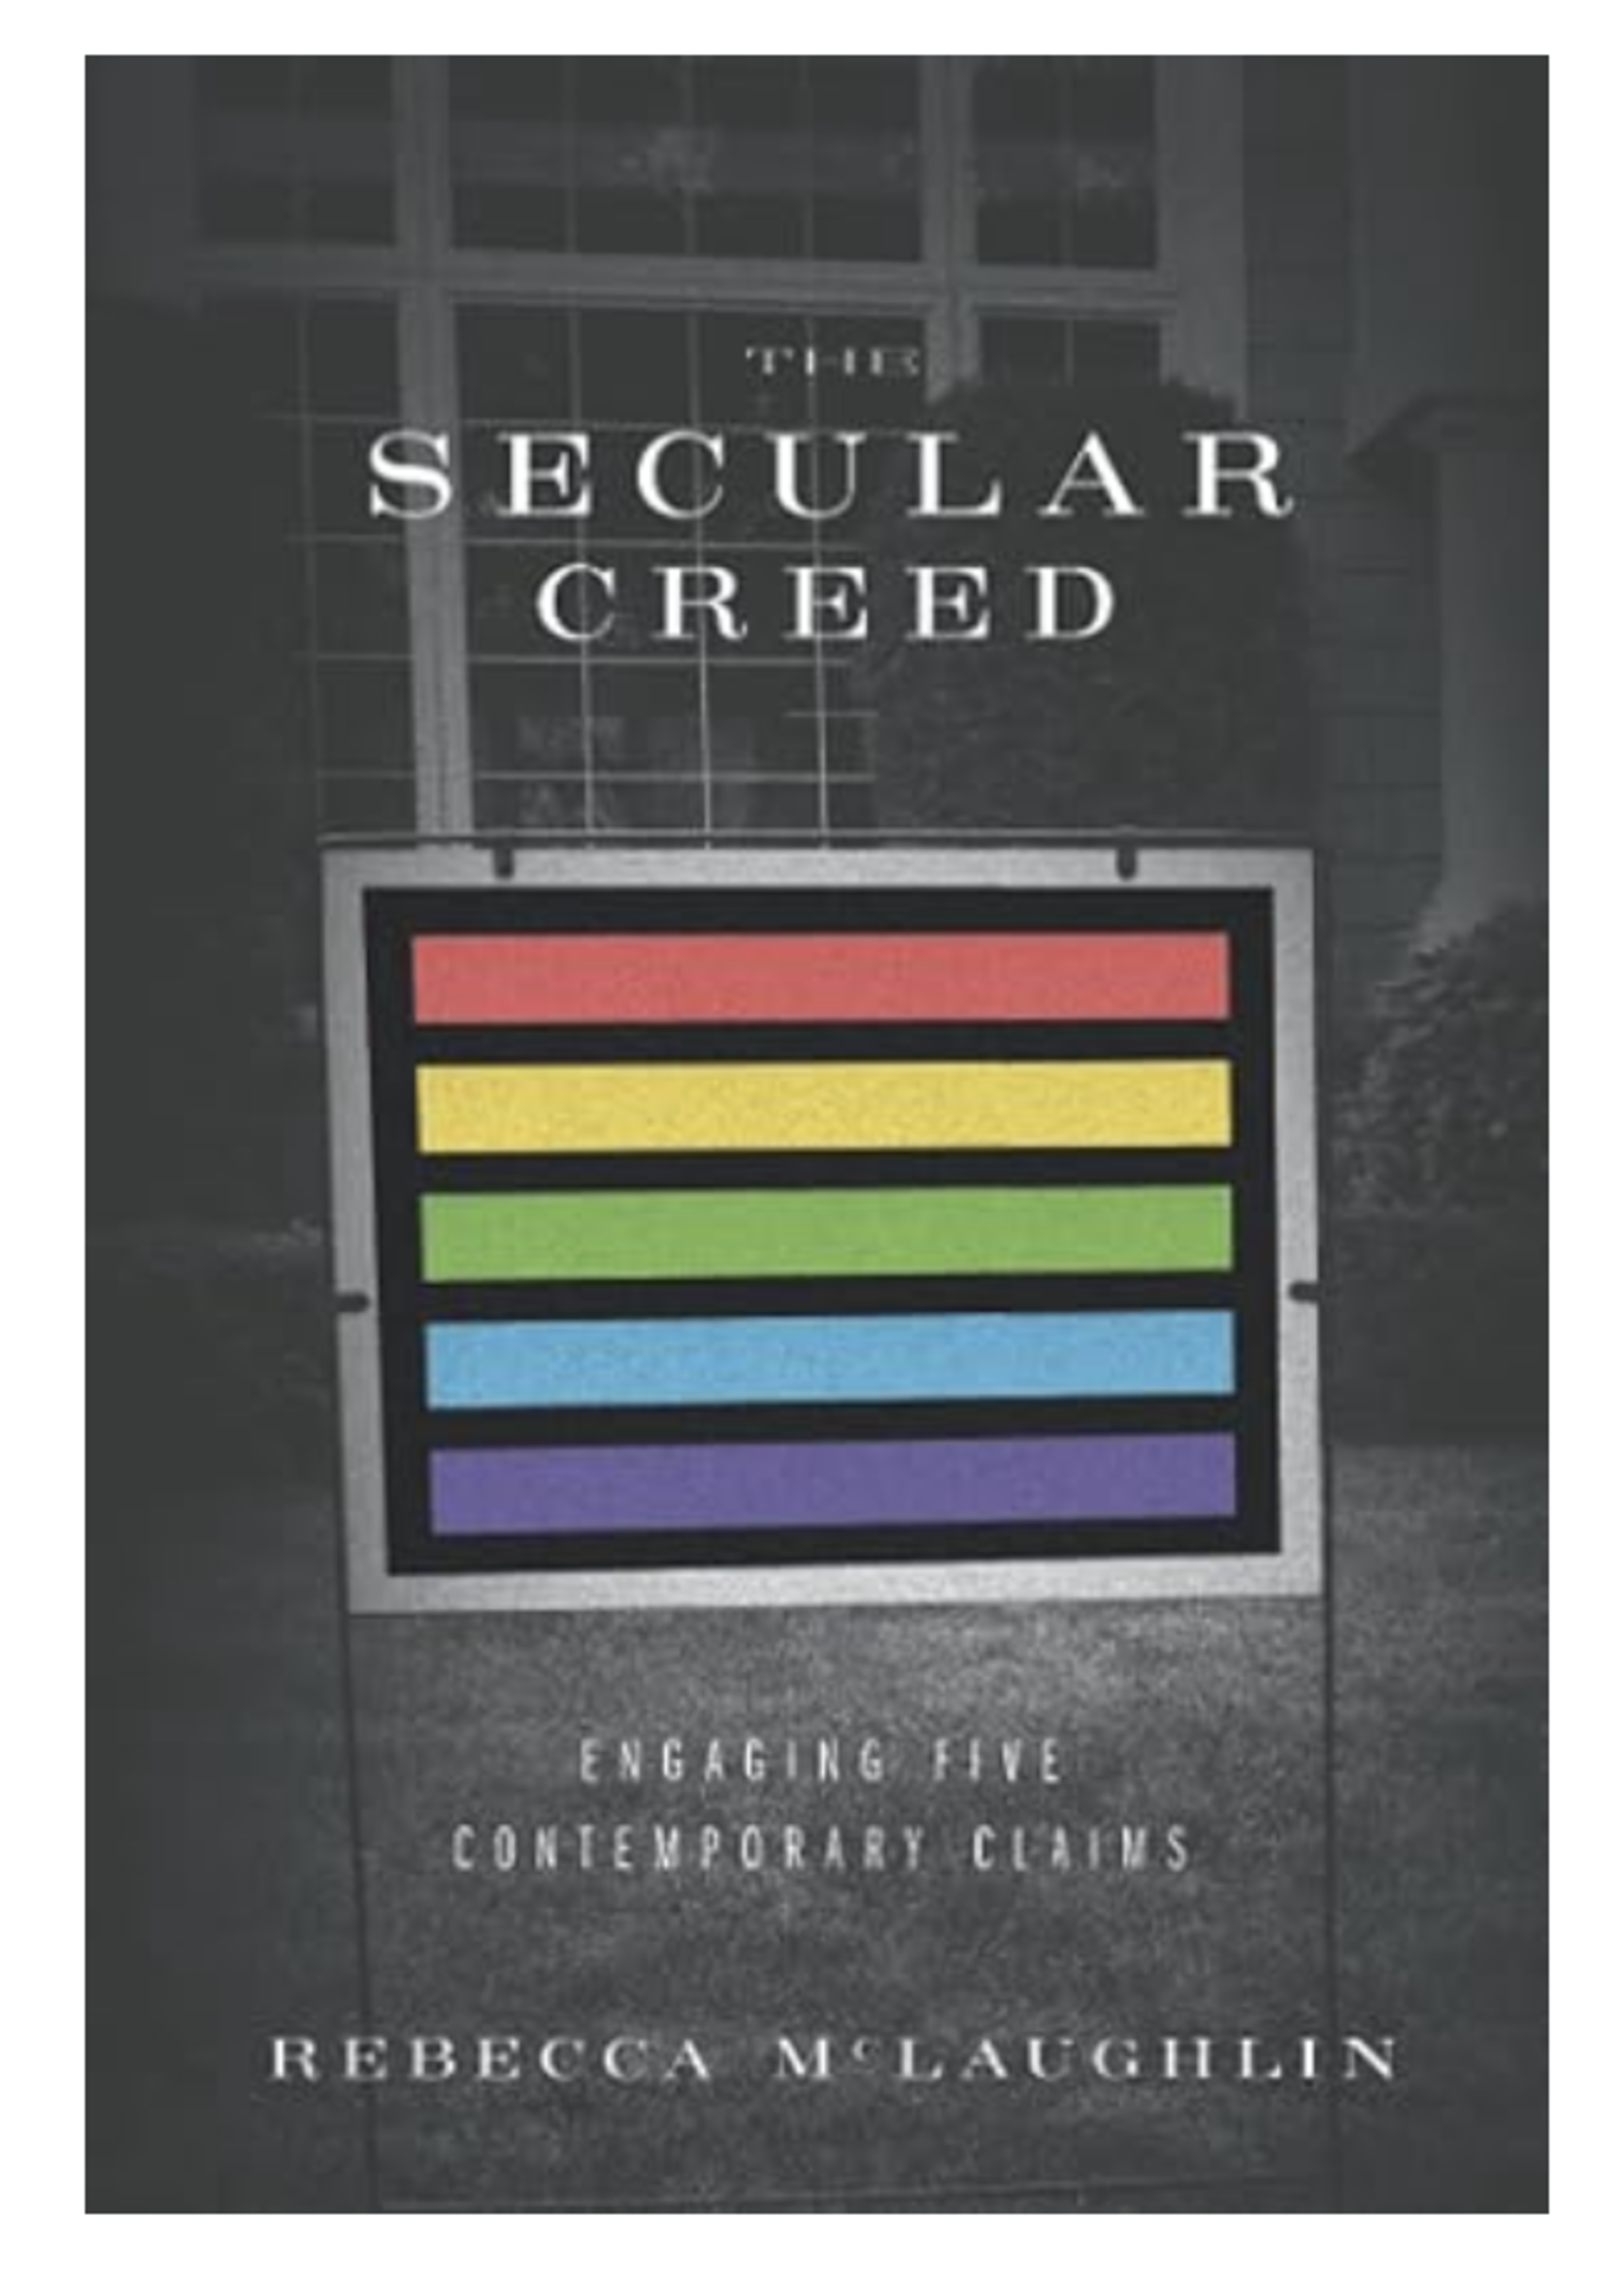 McLaughlin, Rebecca The Secular Creed: Engaging Five Contemporary Claims [Rebecca McLaughlin]